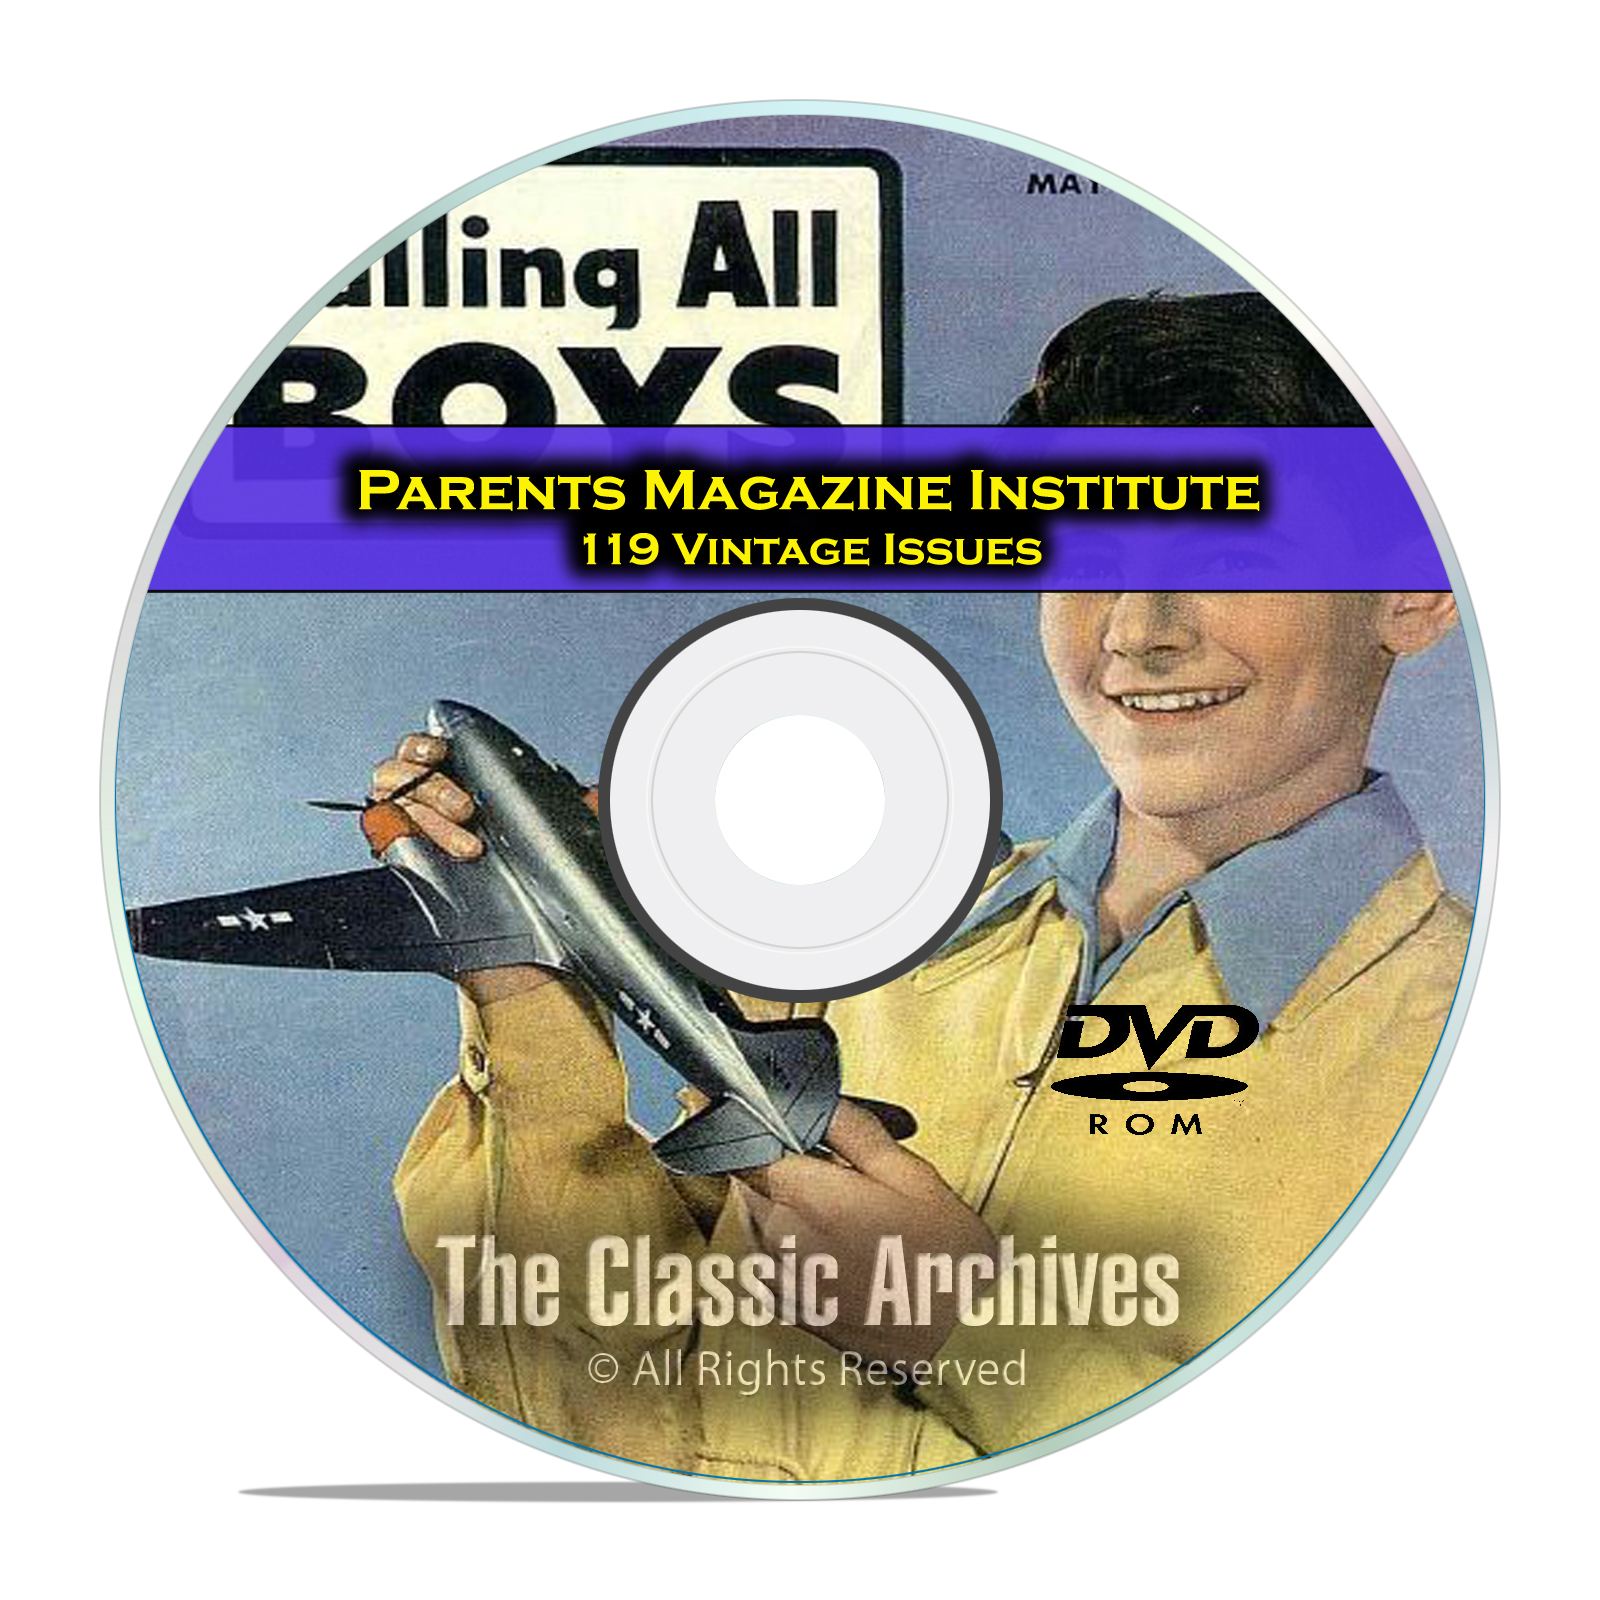 Parents Magazine Institute, Calling All Boys, Girls, Golden Age Comics DVD